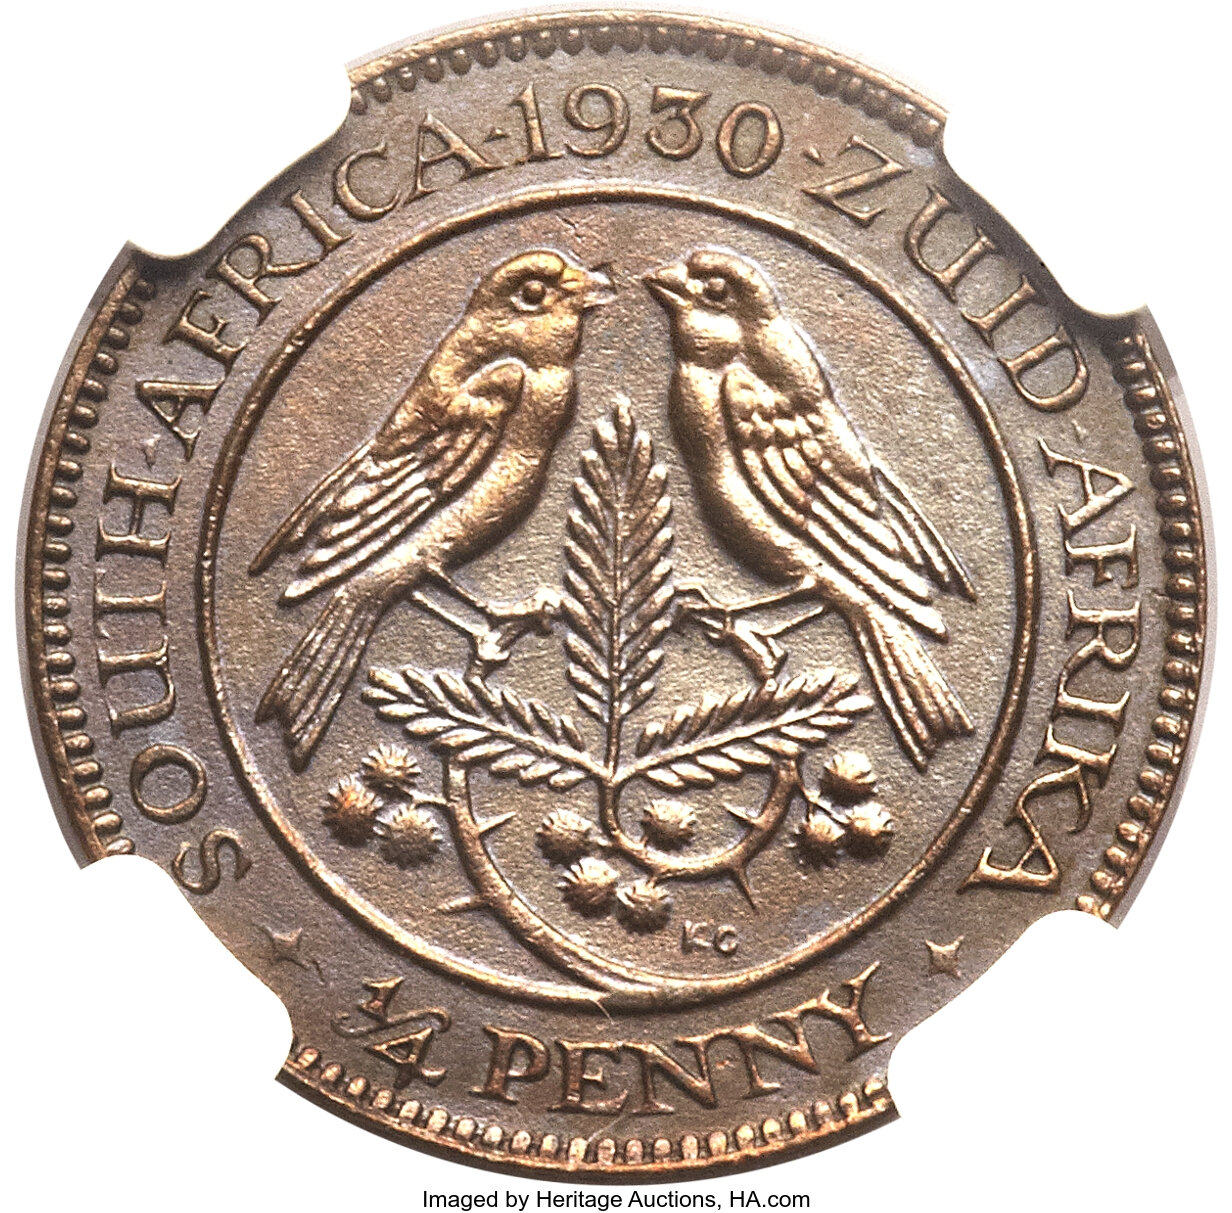 1/4 penny - George V